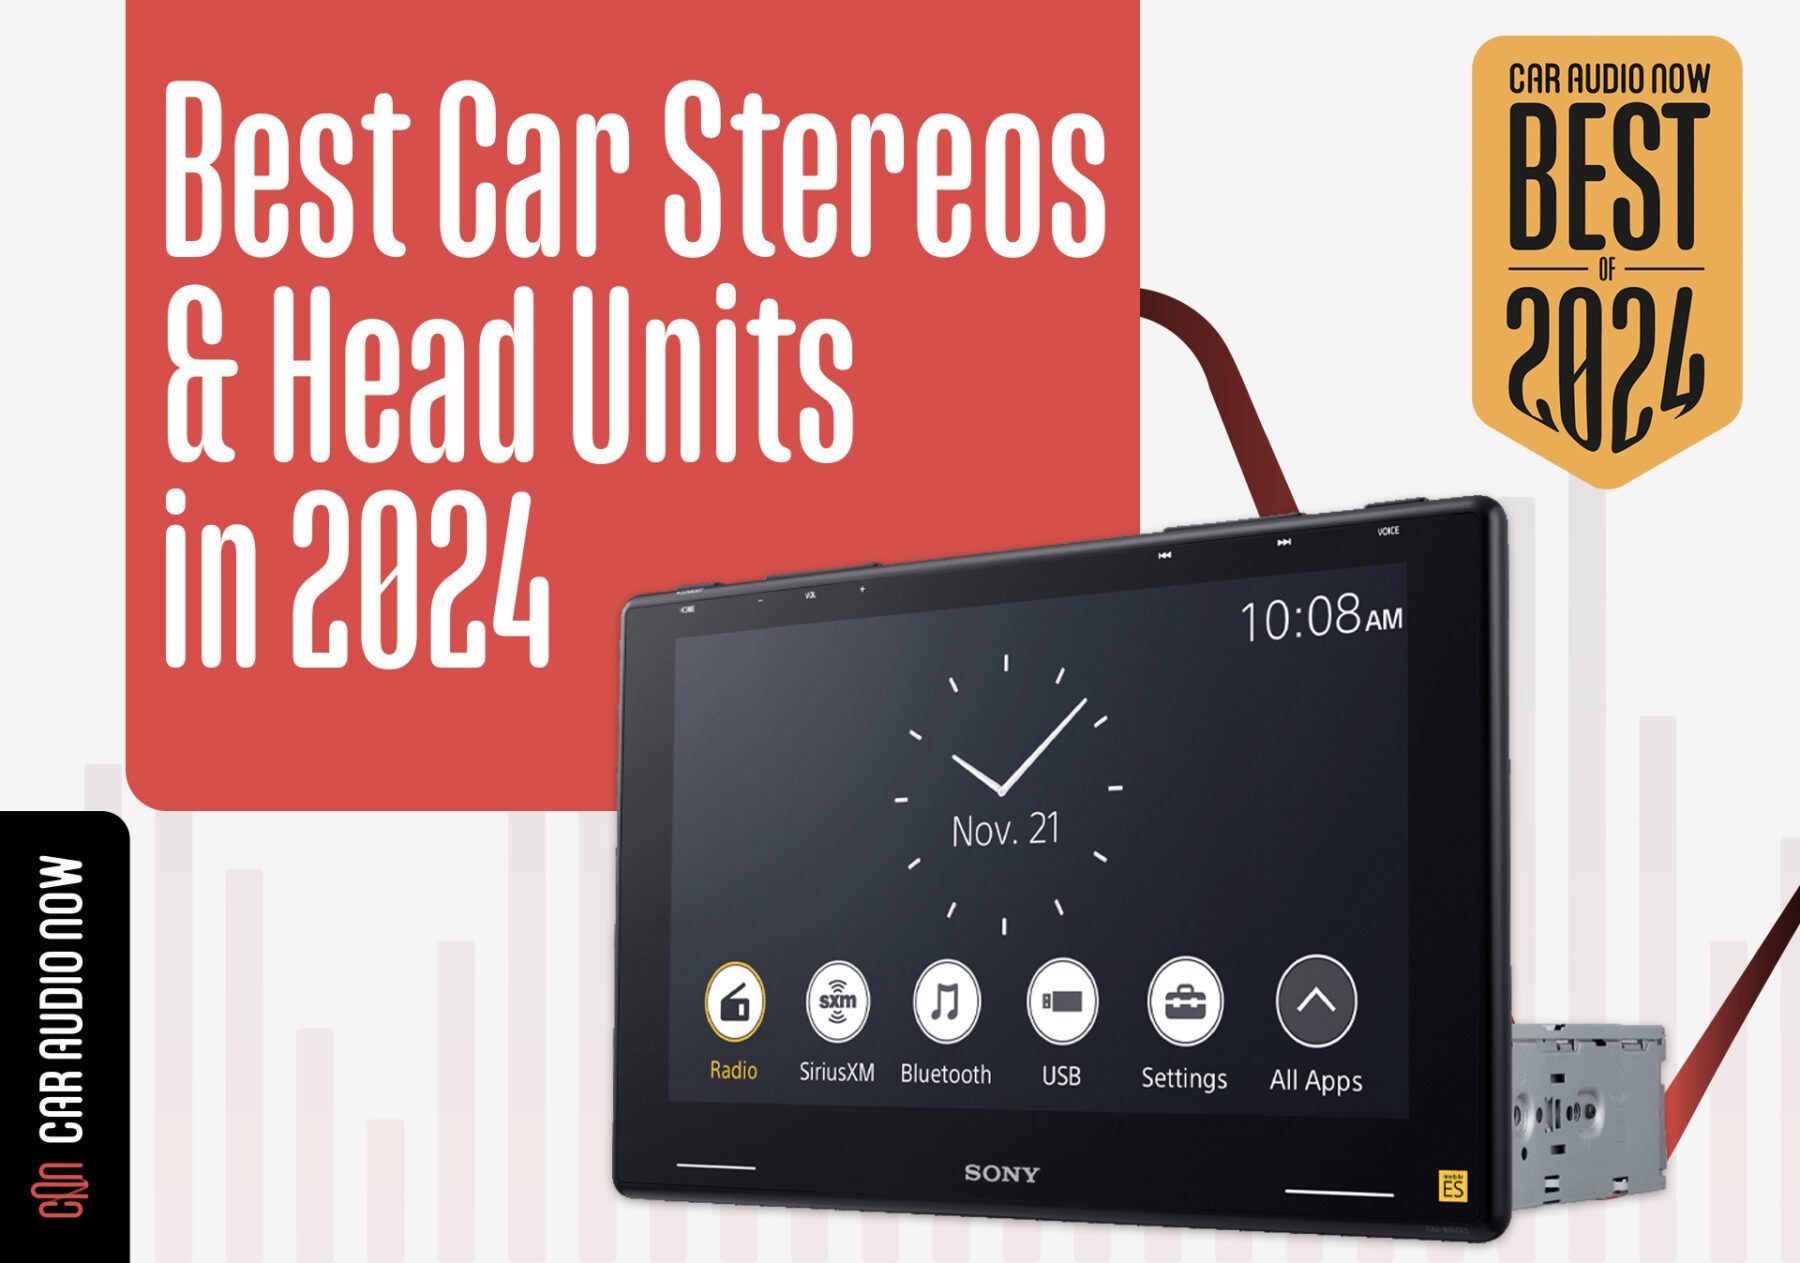 Sony Car Audio: Sony Car Stereo - Best Buy